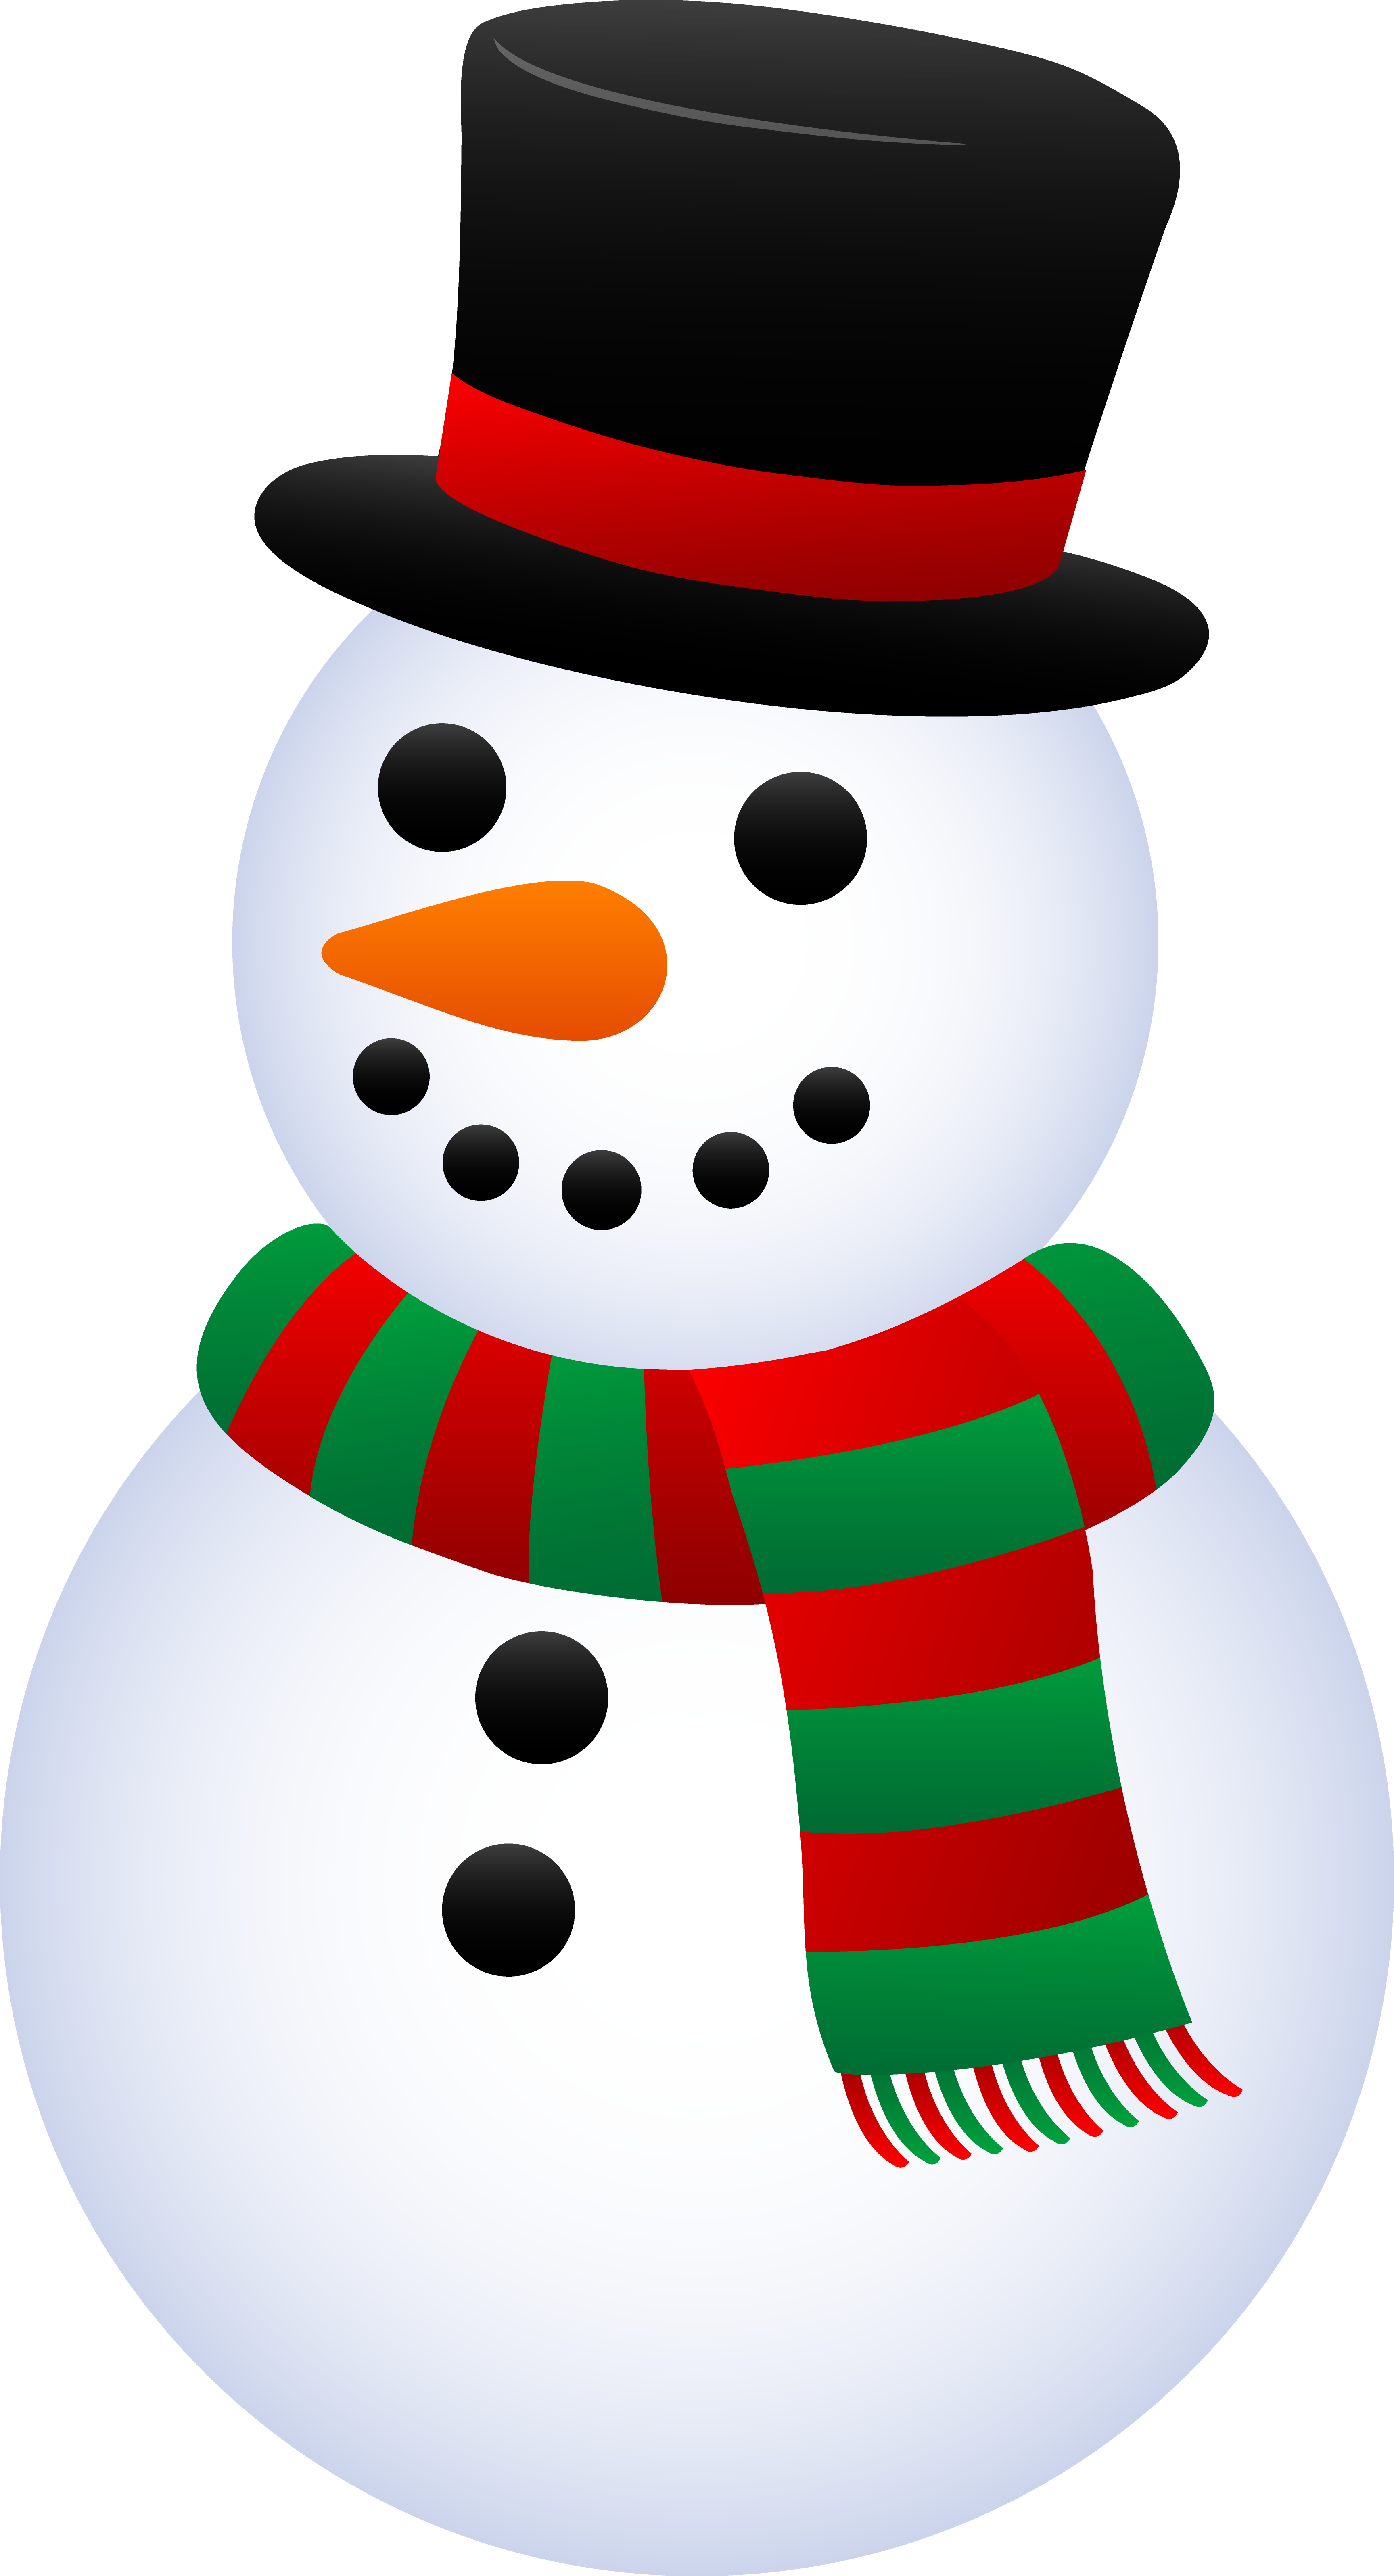 free-cute-snowman-cliparts-download-free-cute-snowman-cliparts-png-images-free-cliparts-on